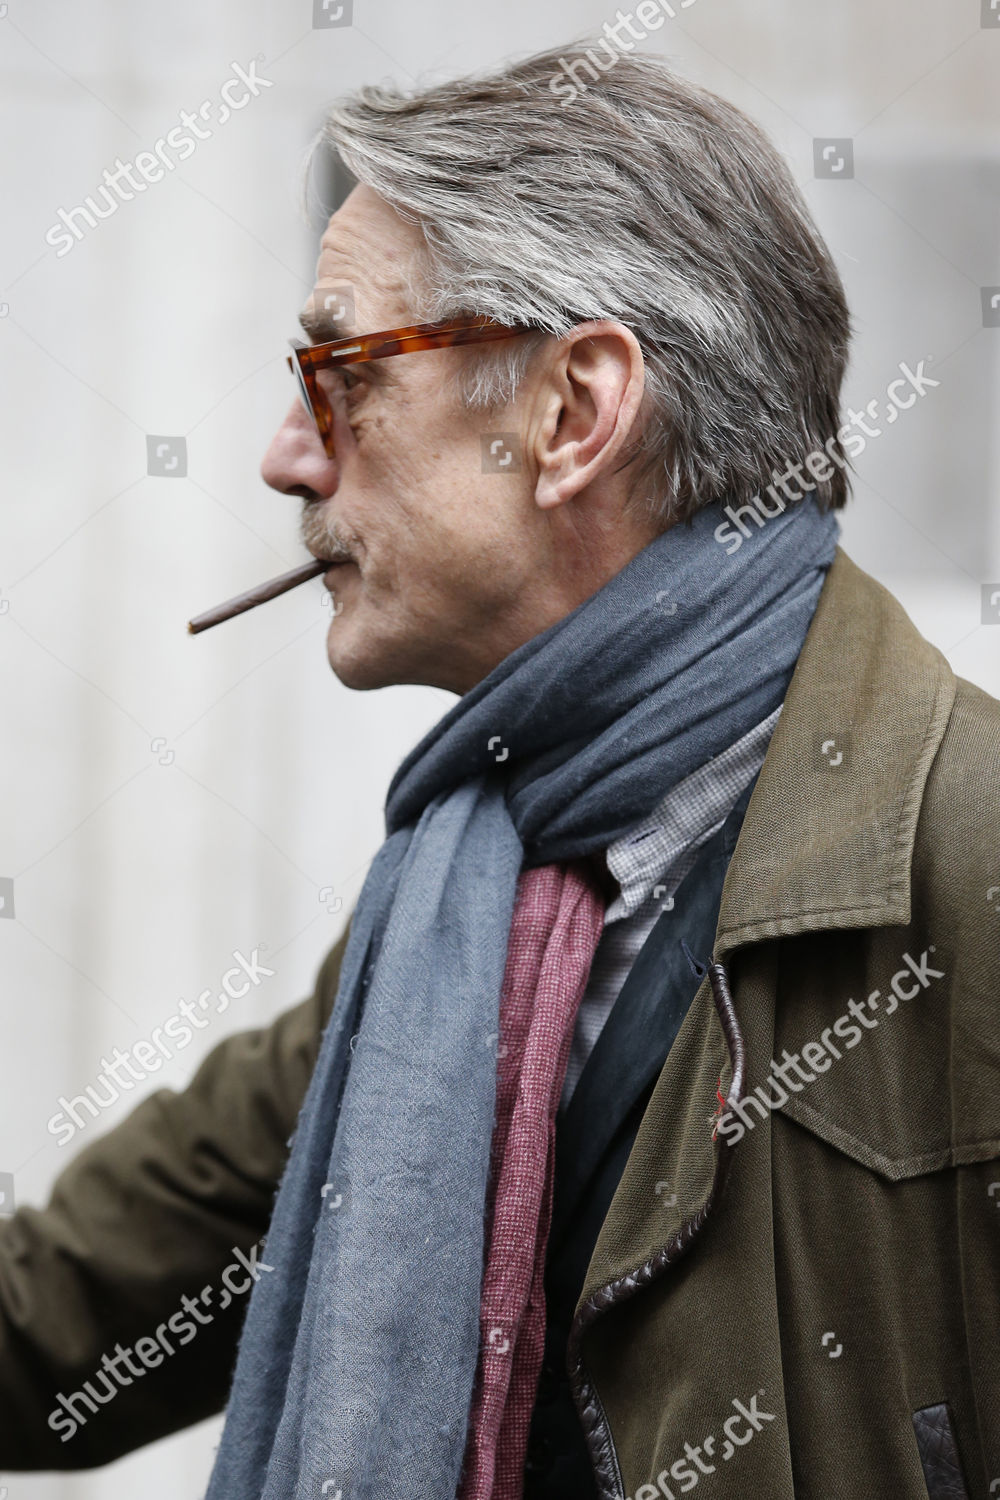 Jeremy Irons fumando un cigarrillo (o marihuana)
